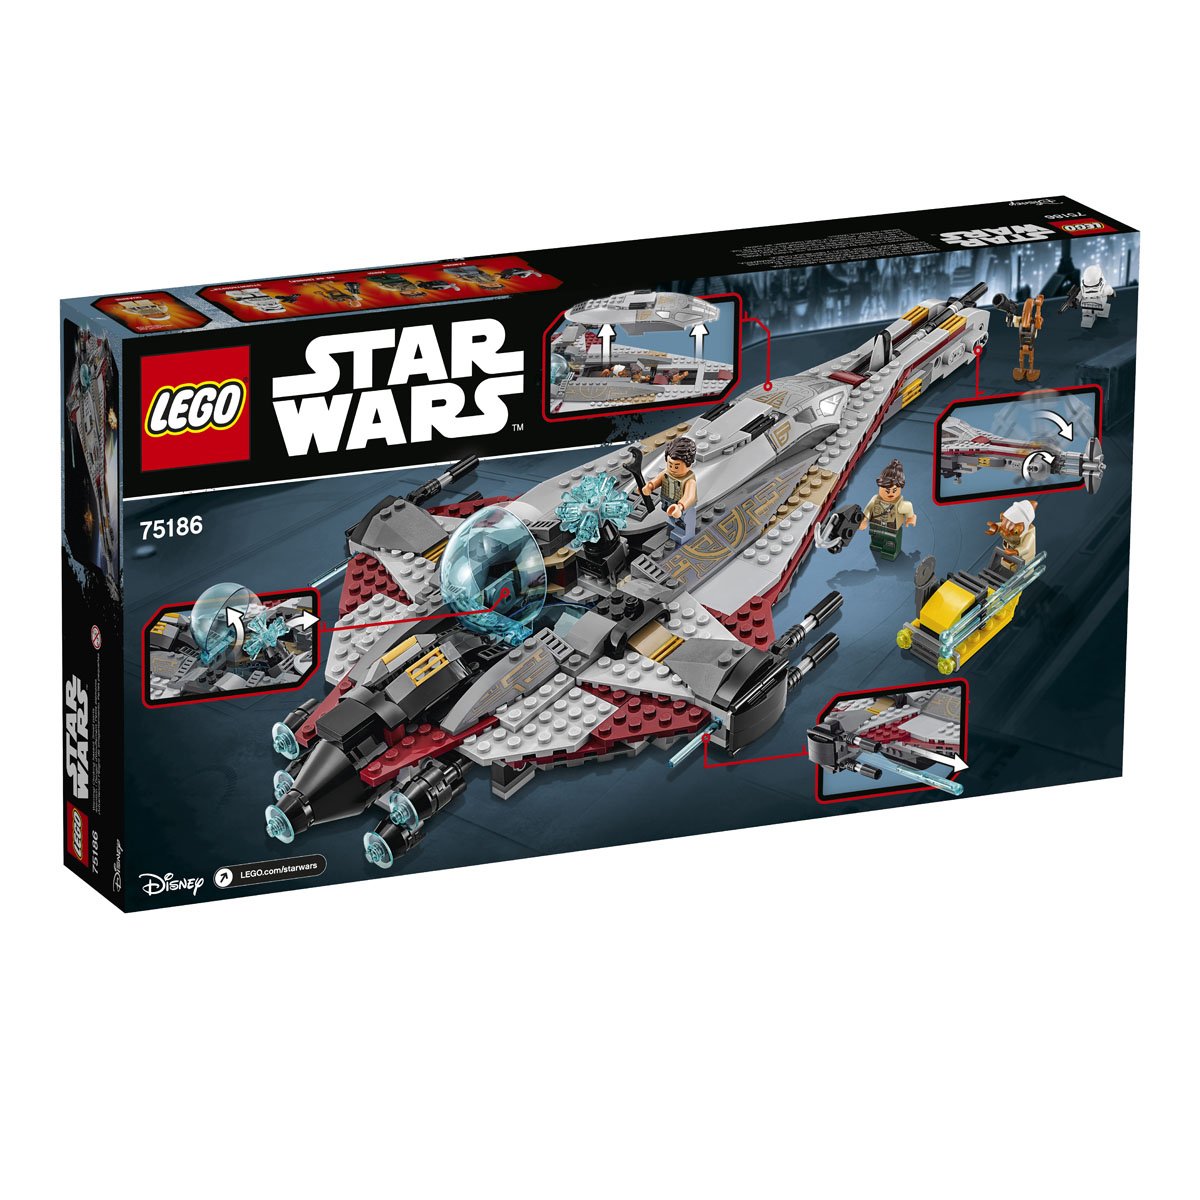 Star Wars The Arrowhead Lego